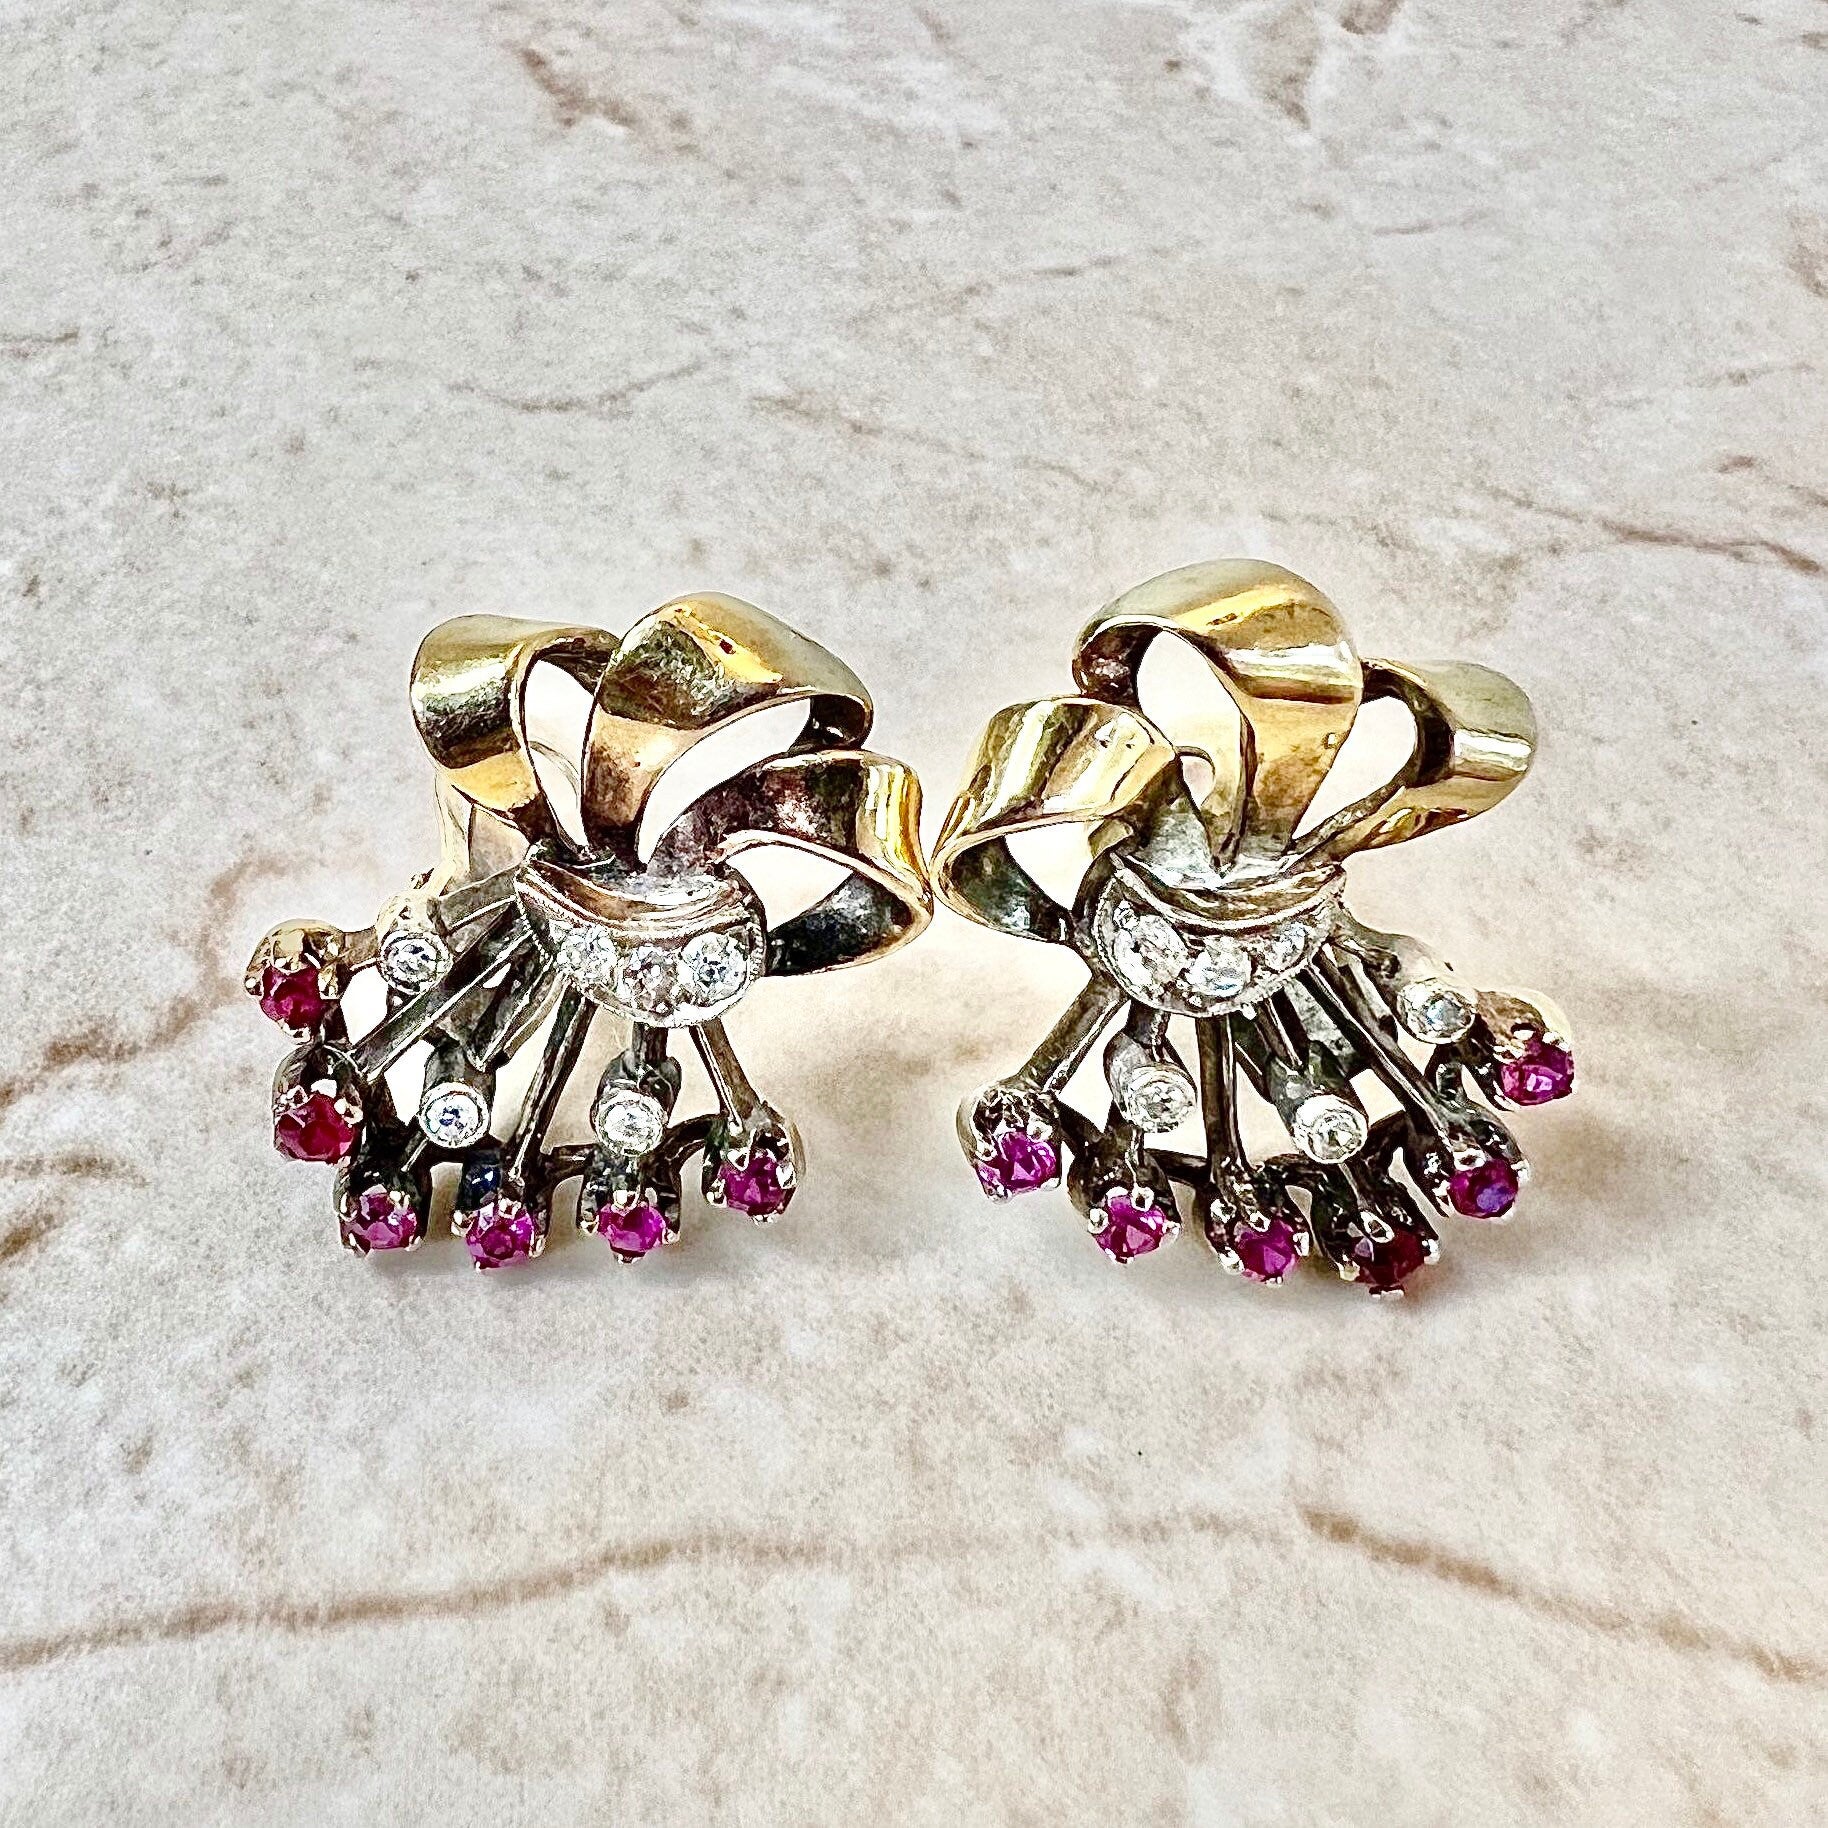 Vintage Retro 14K Diamond & Synthetic Ruby Clip On Earrings - Two Tone Gold Ruby Earrings - Retro Earrings - July Birthstone - Gifts For Her